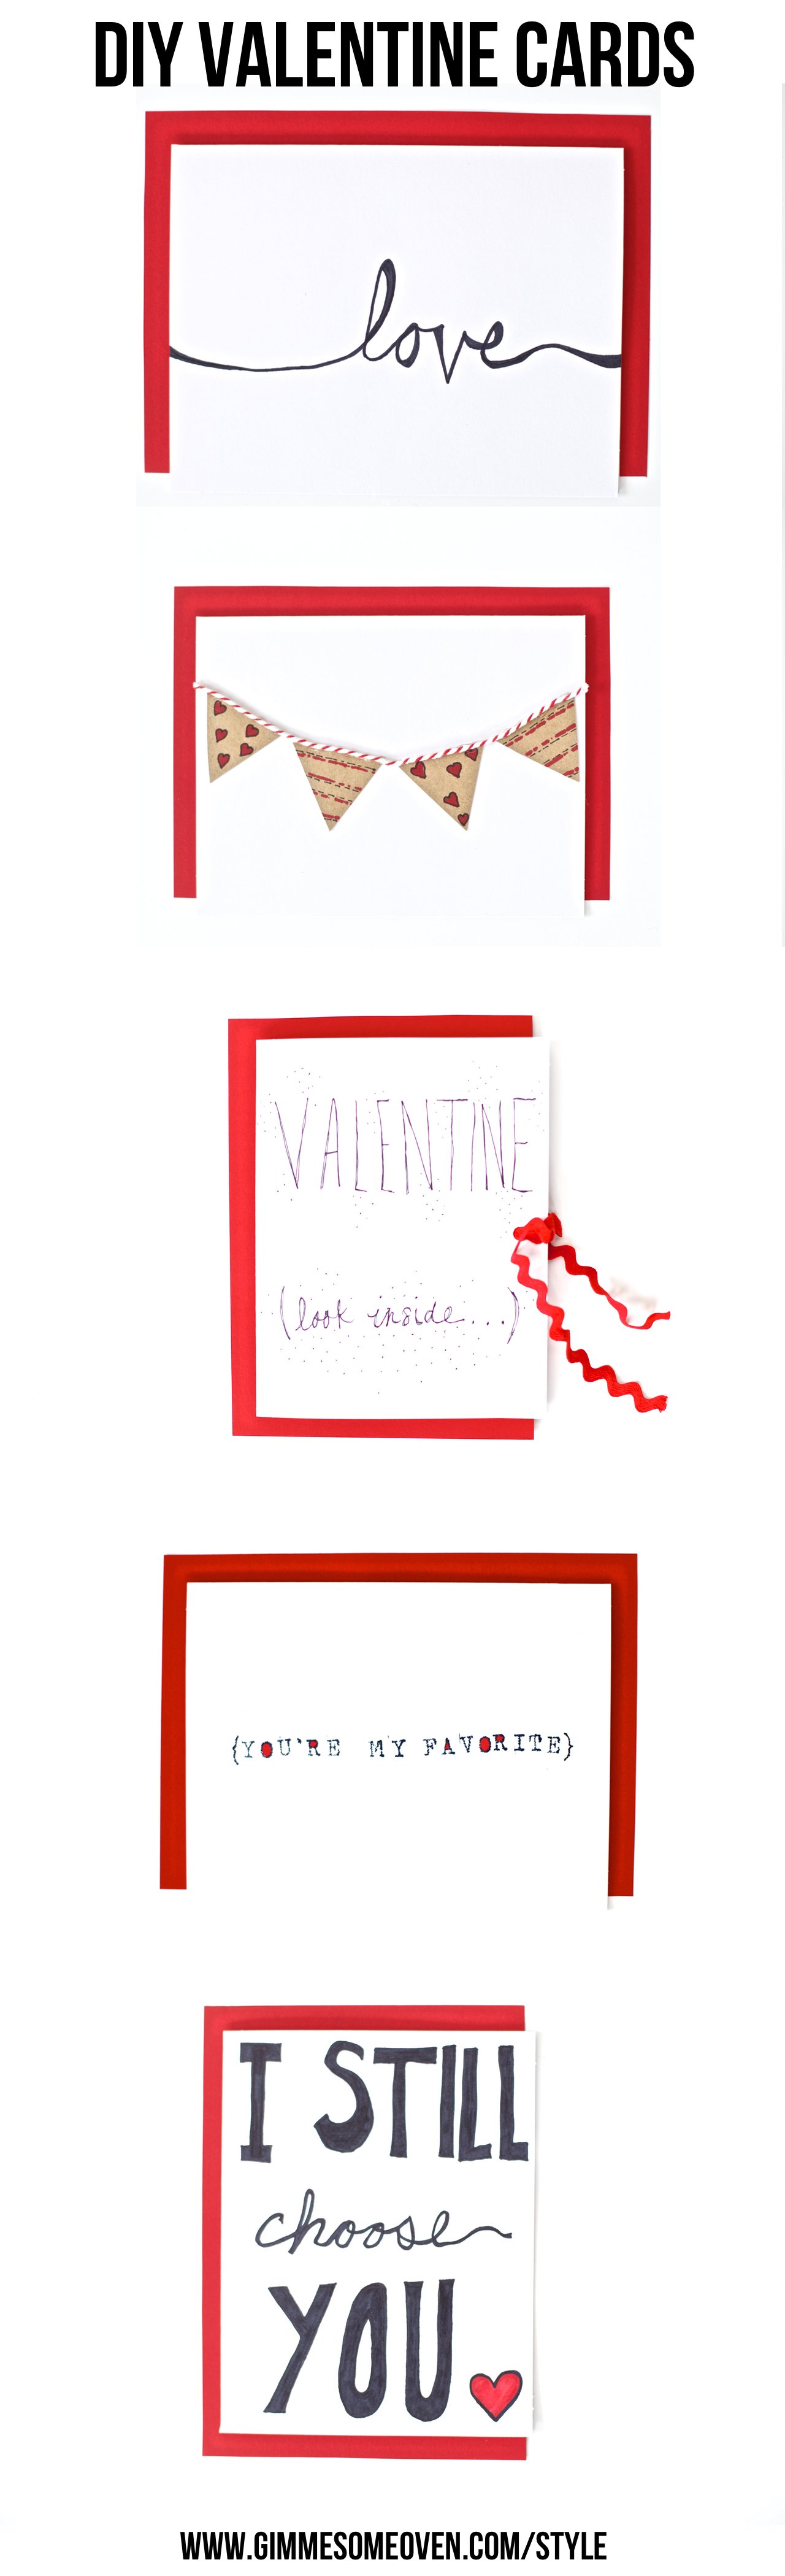 Five Easy DIY Valentine Cards | www.gimmesomeoven.com/style #valentine #diy #cards